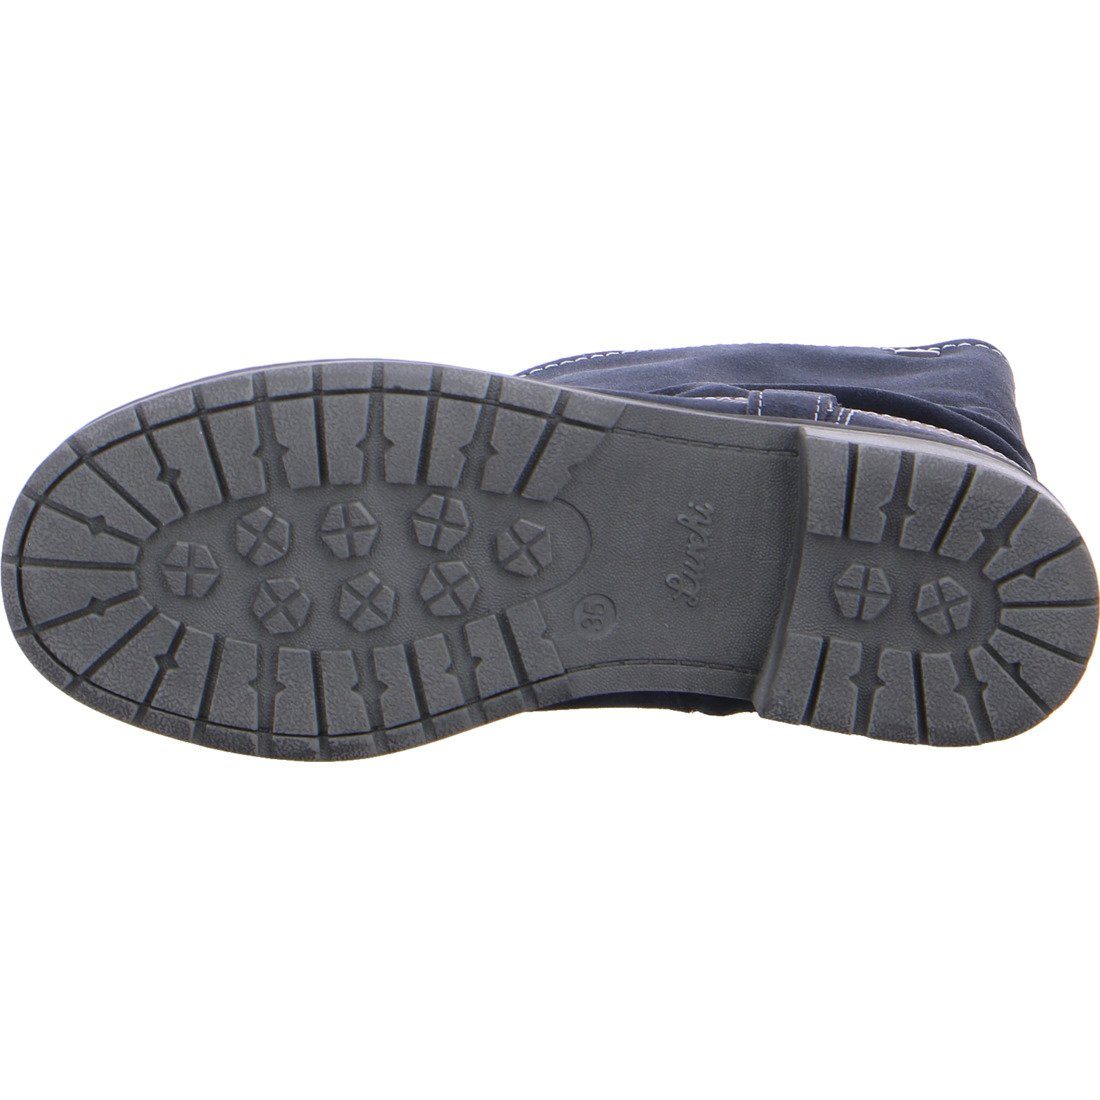 Lurchi Lurchi Stiefel - 044032 Schuhe, Stiefel blau Lia-Tex Rauleder